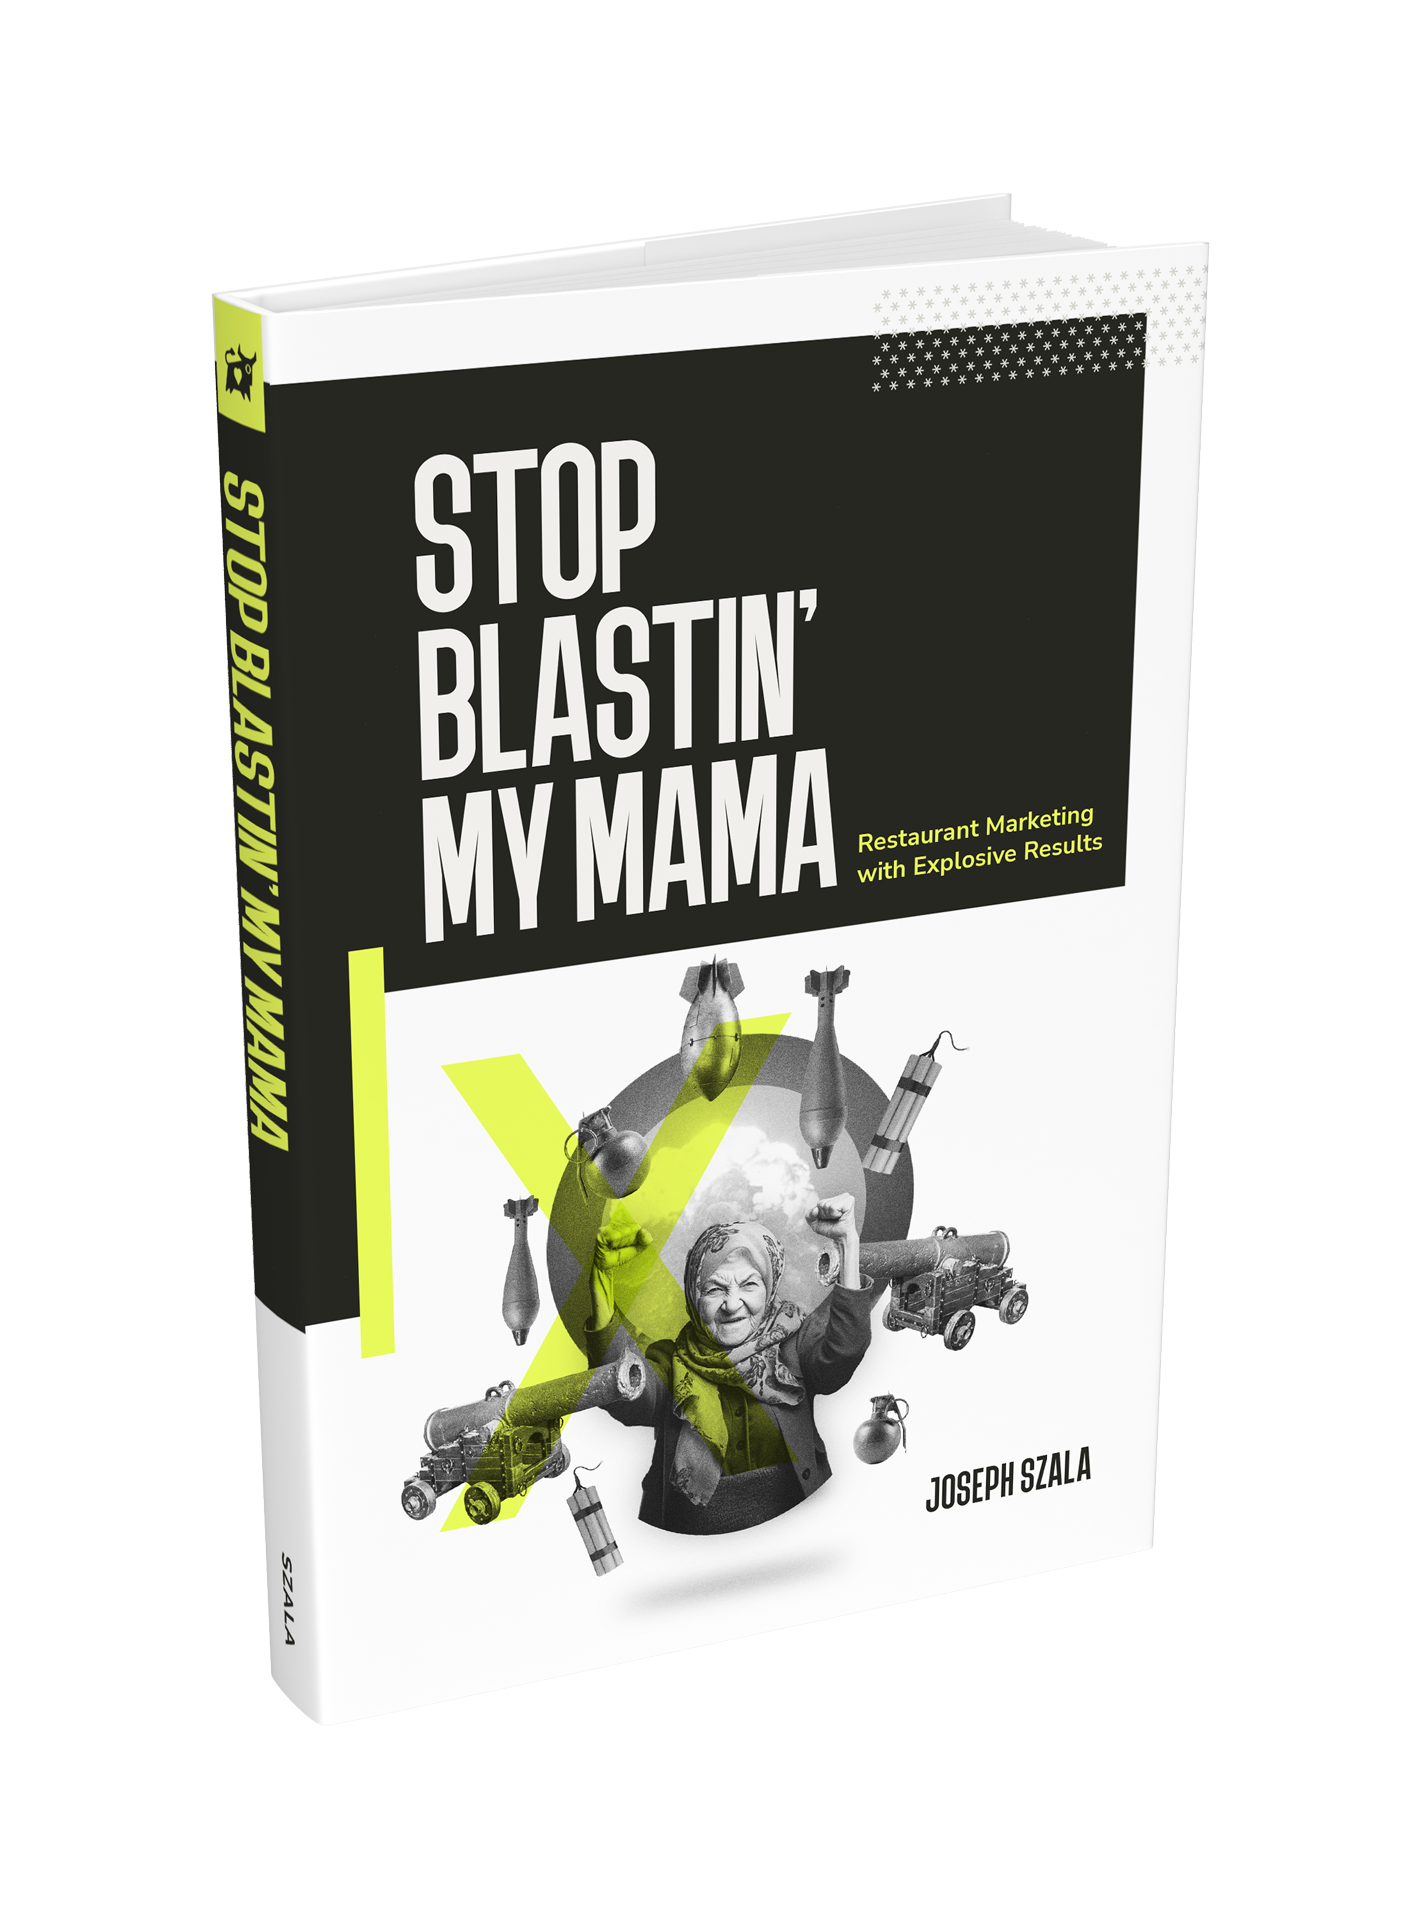 Stop Blastin' My Mama book on restaurant marketing cover design